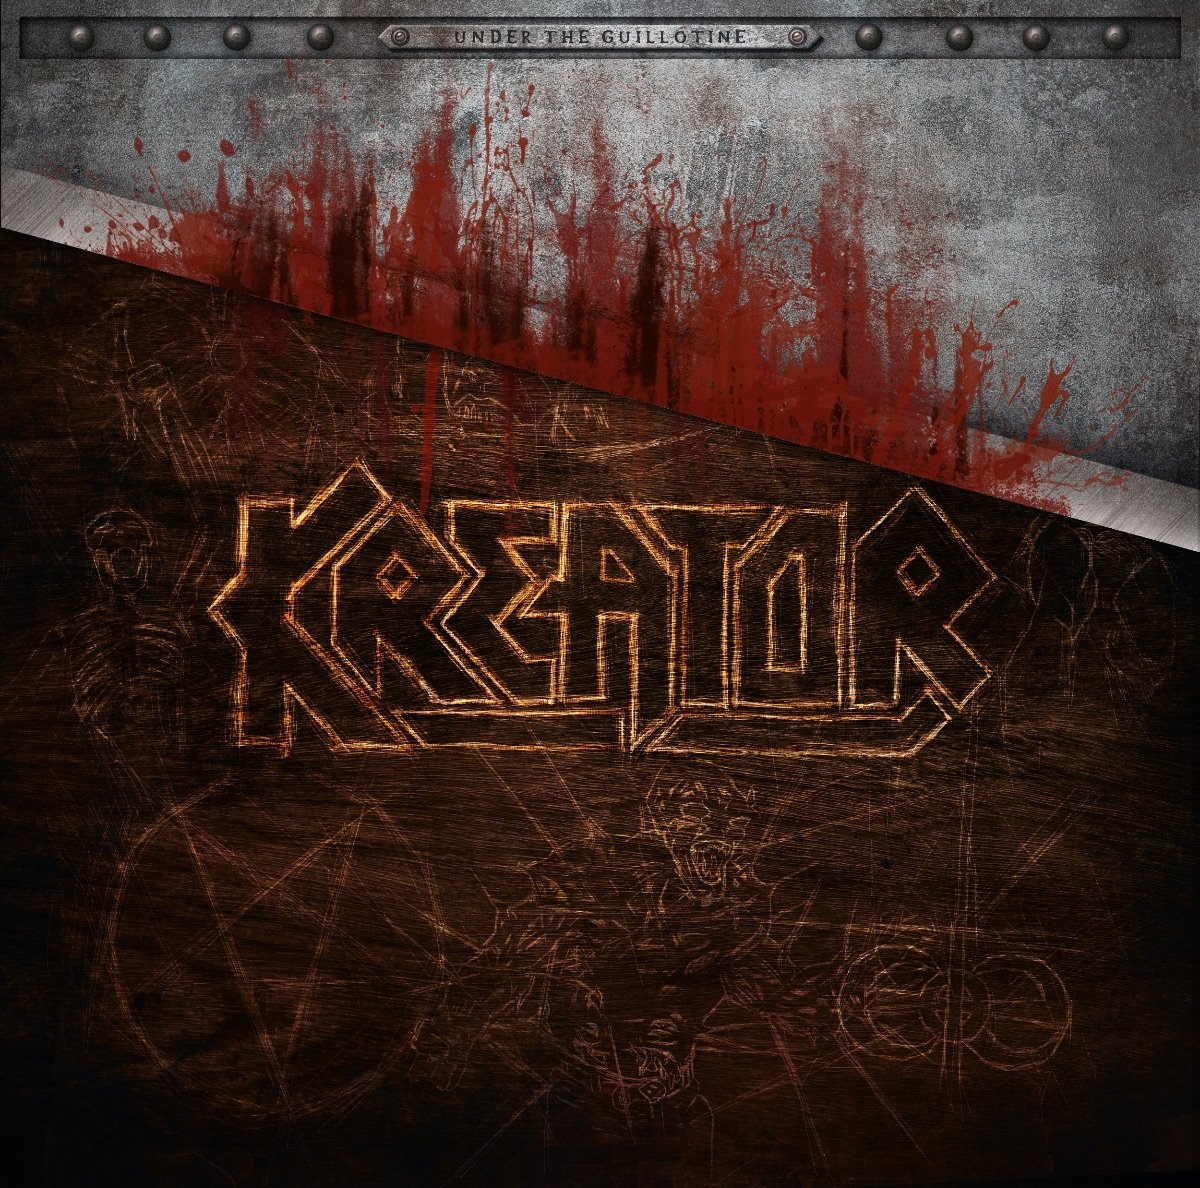 Kreator – 666 - World Divided Lyrics